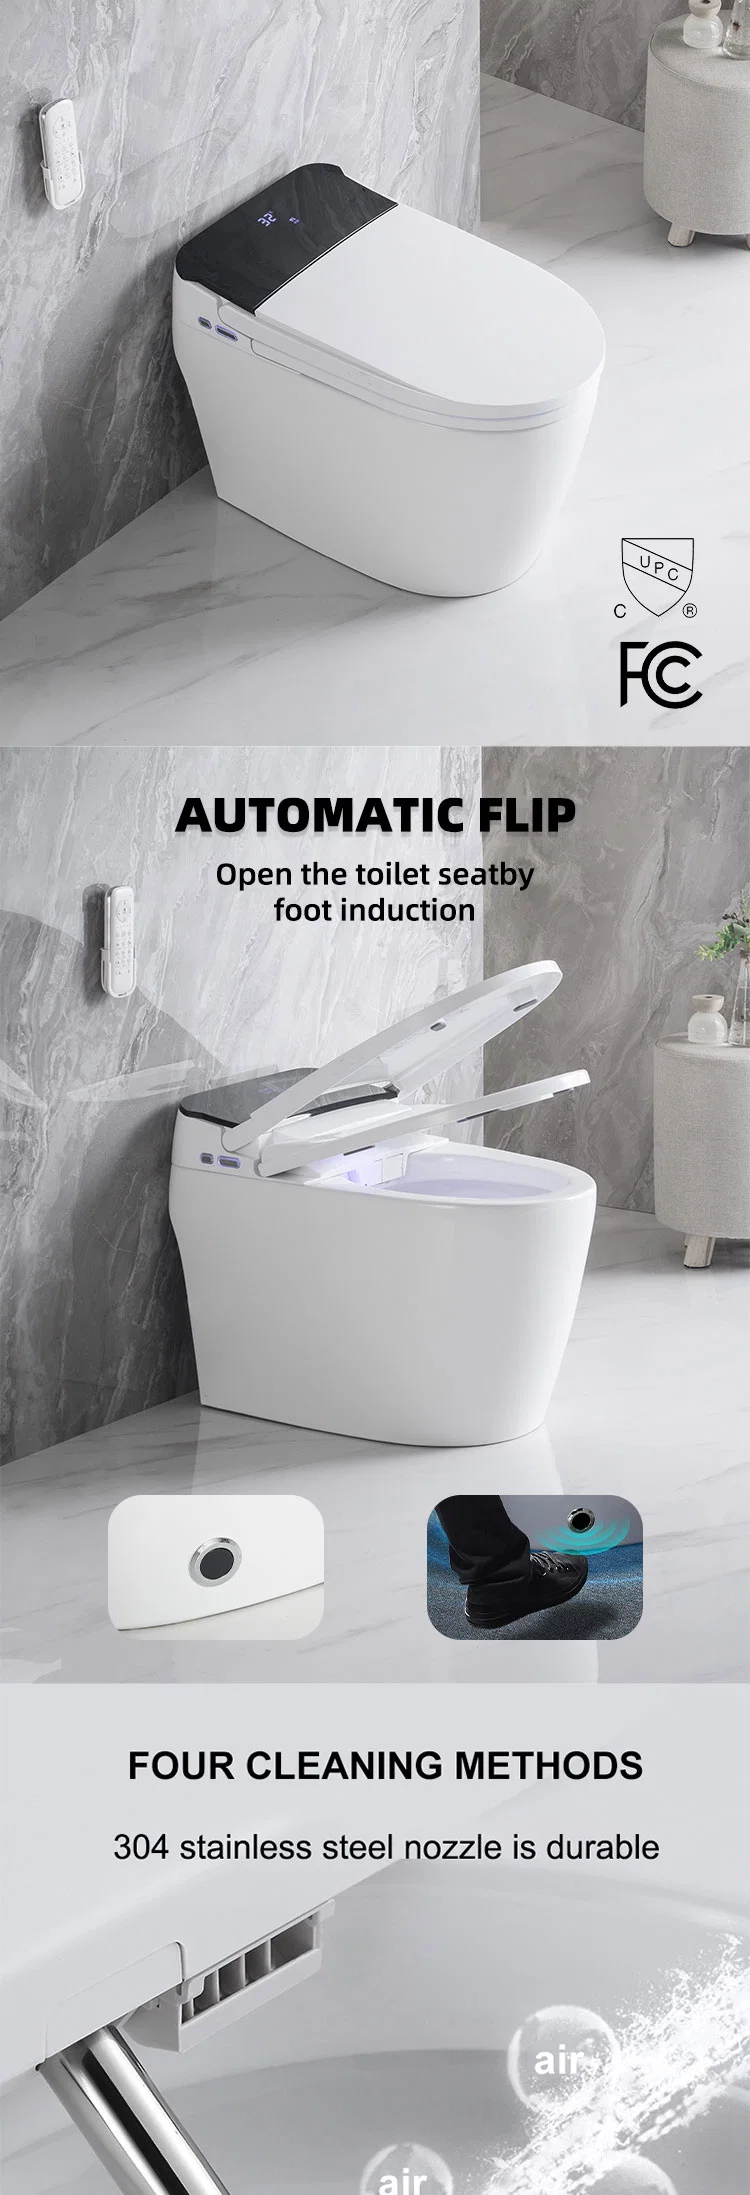 Cupc Kids Mode Automatic Flush Electric Bidet Wc Intelligent Smart Toilet with Remote Control